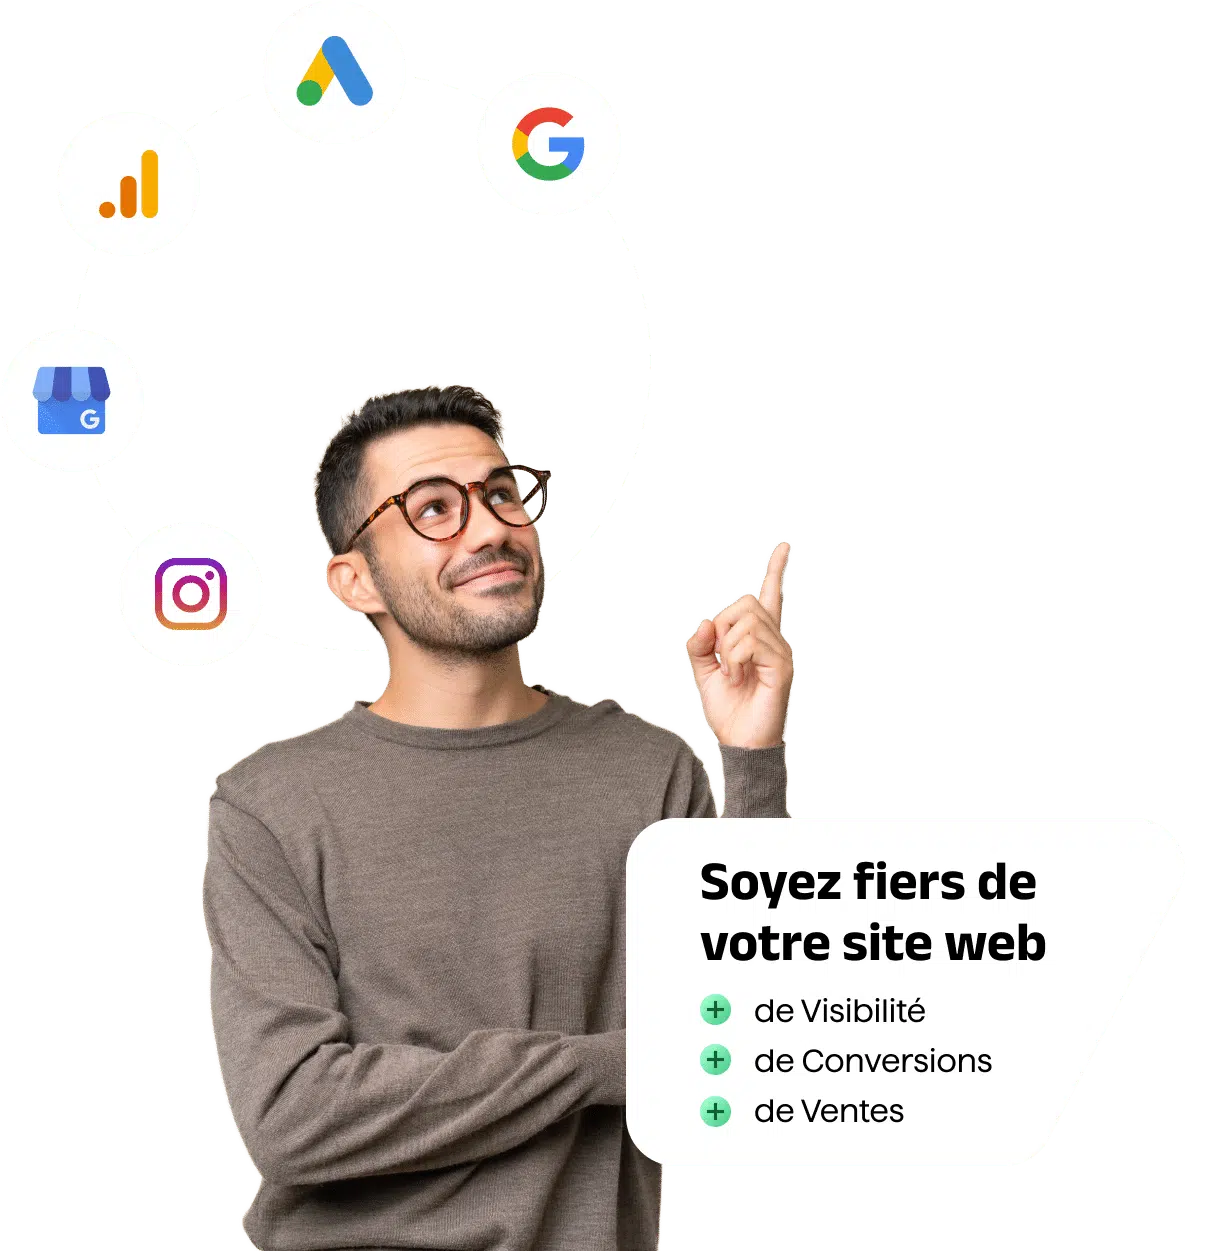 Agence IDEO - Agence de communication Rouen- Icones Instagram, Google, GMB, Google ADS et Analytics